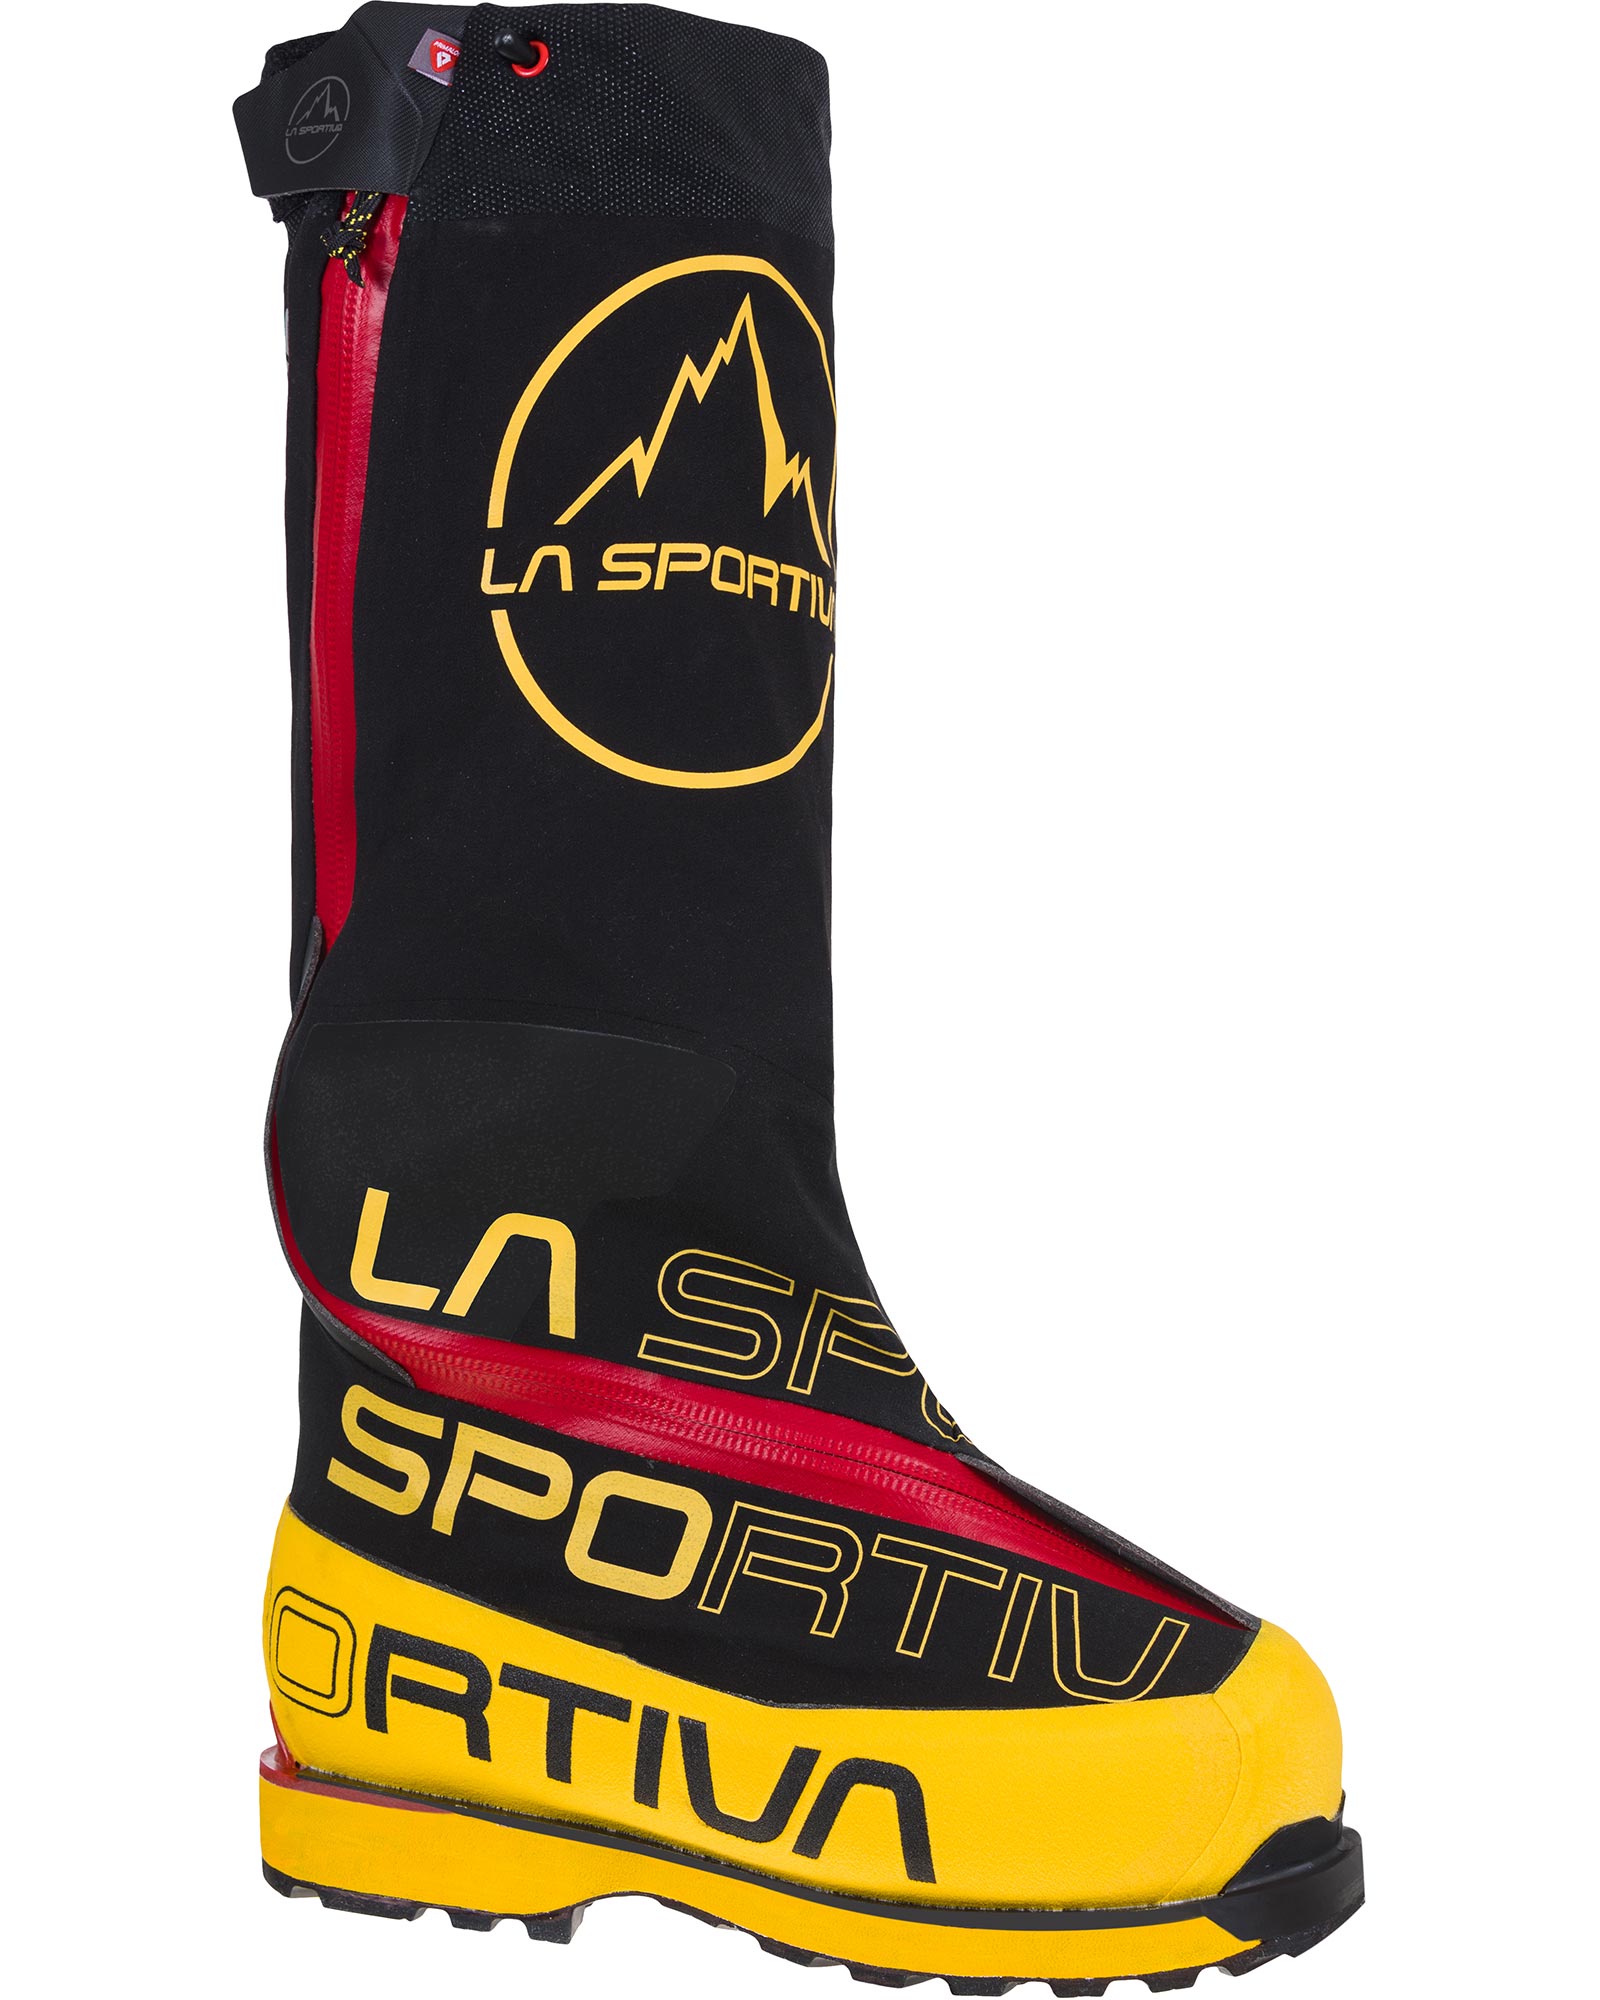 La Sportiva Olympus Mons Cube S Men’s Boots - Yellow/Black EU 42